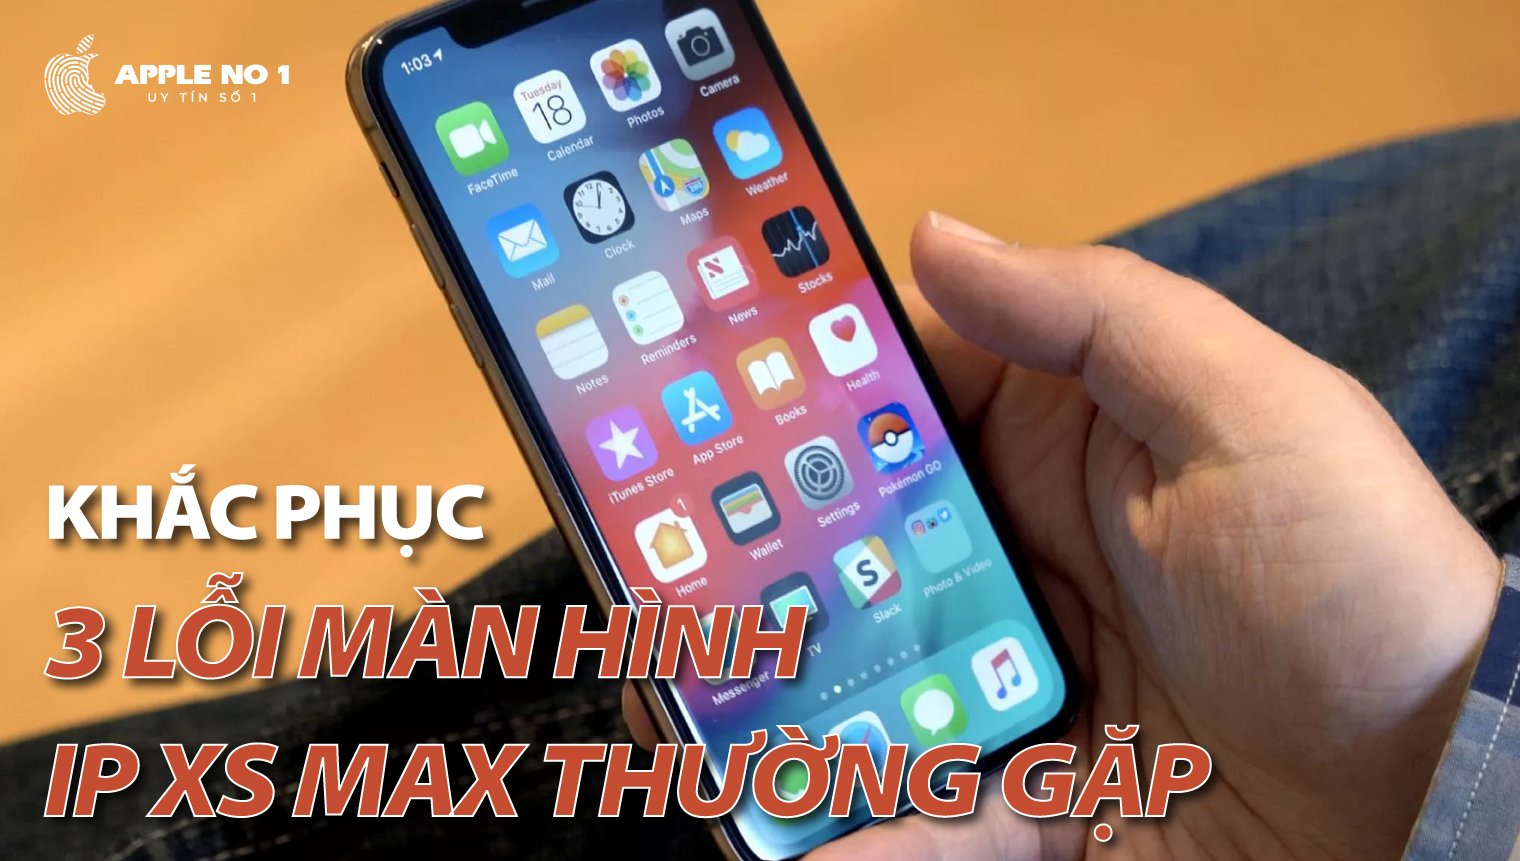 man hinh iP Xs Max: 3 loi thuong gap va cach khac phuc